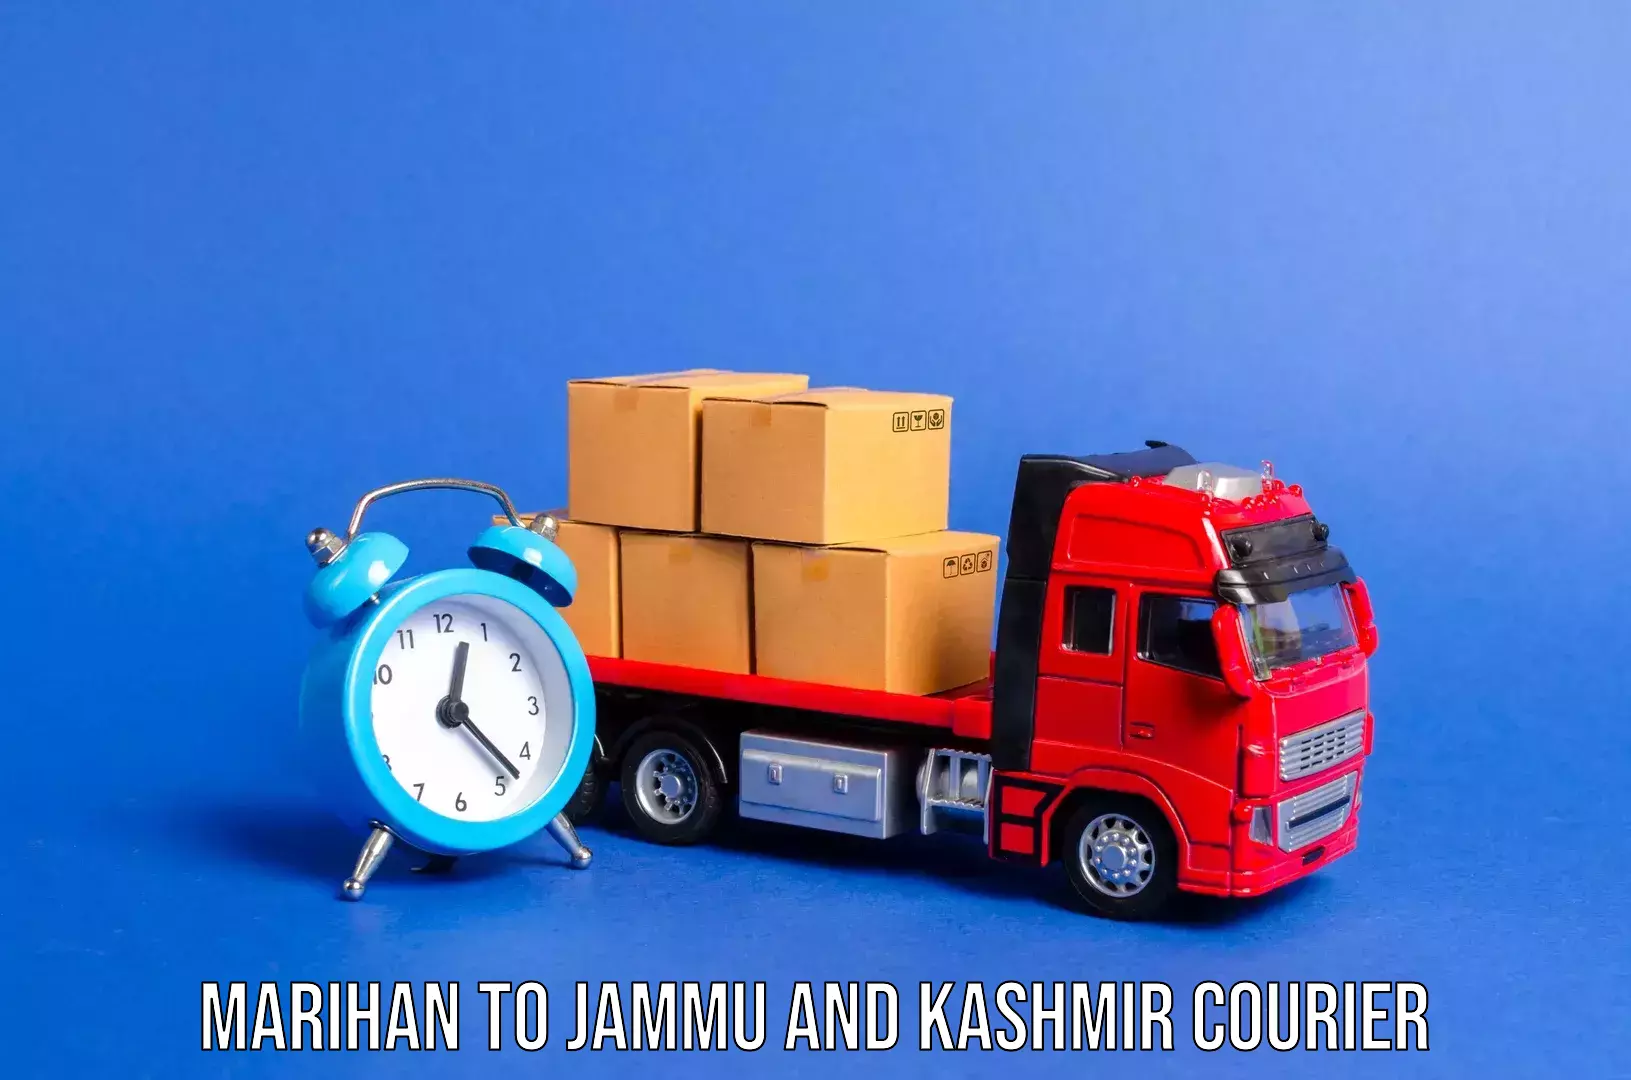 Luggage transfer service Marihan to Jammu and Kashmir